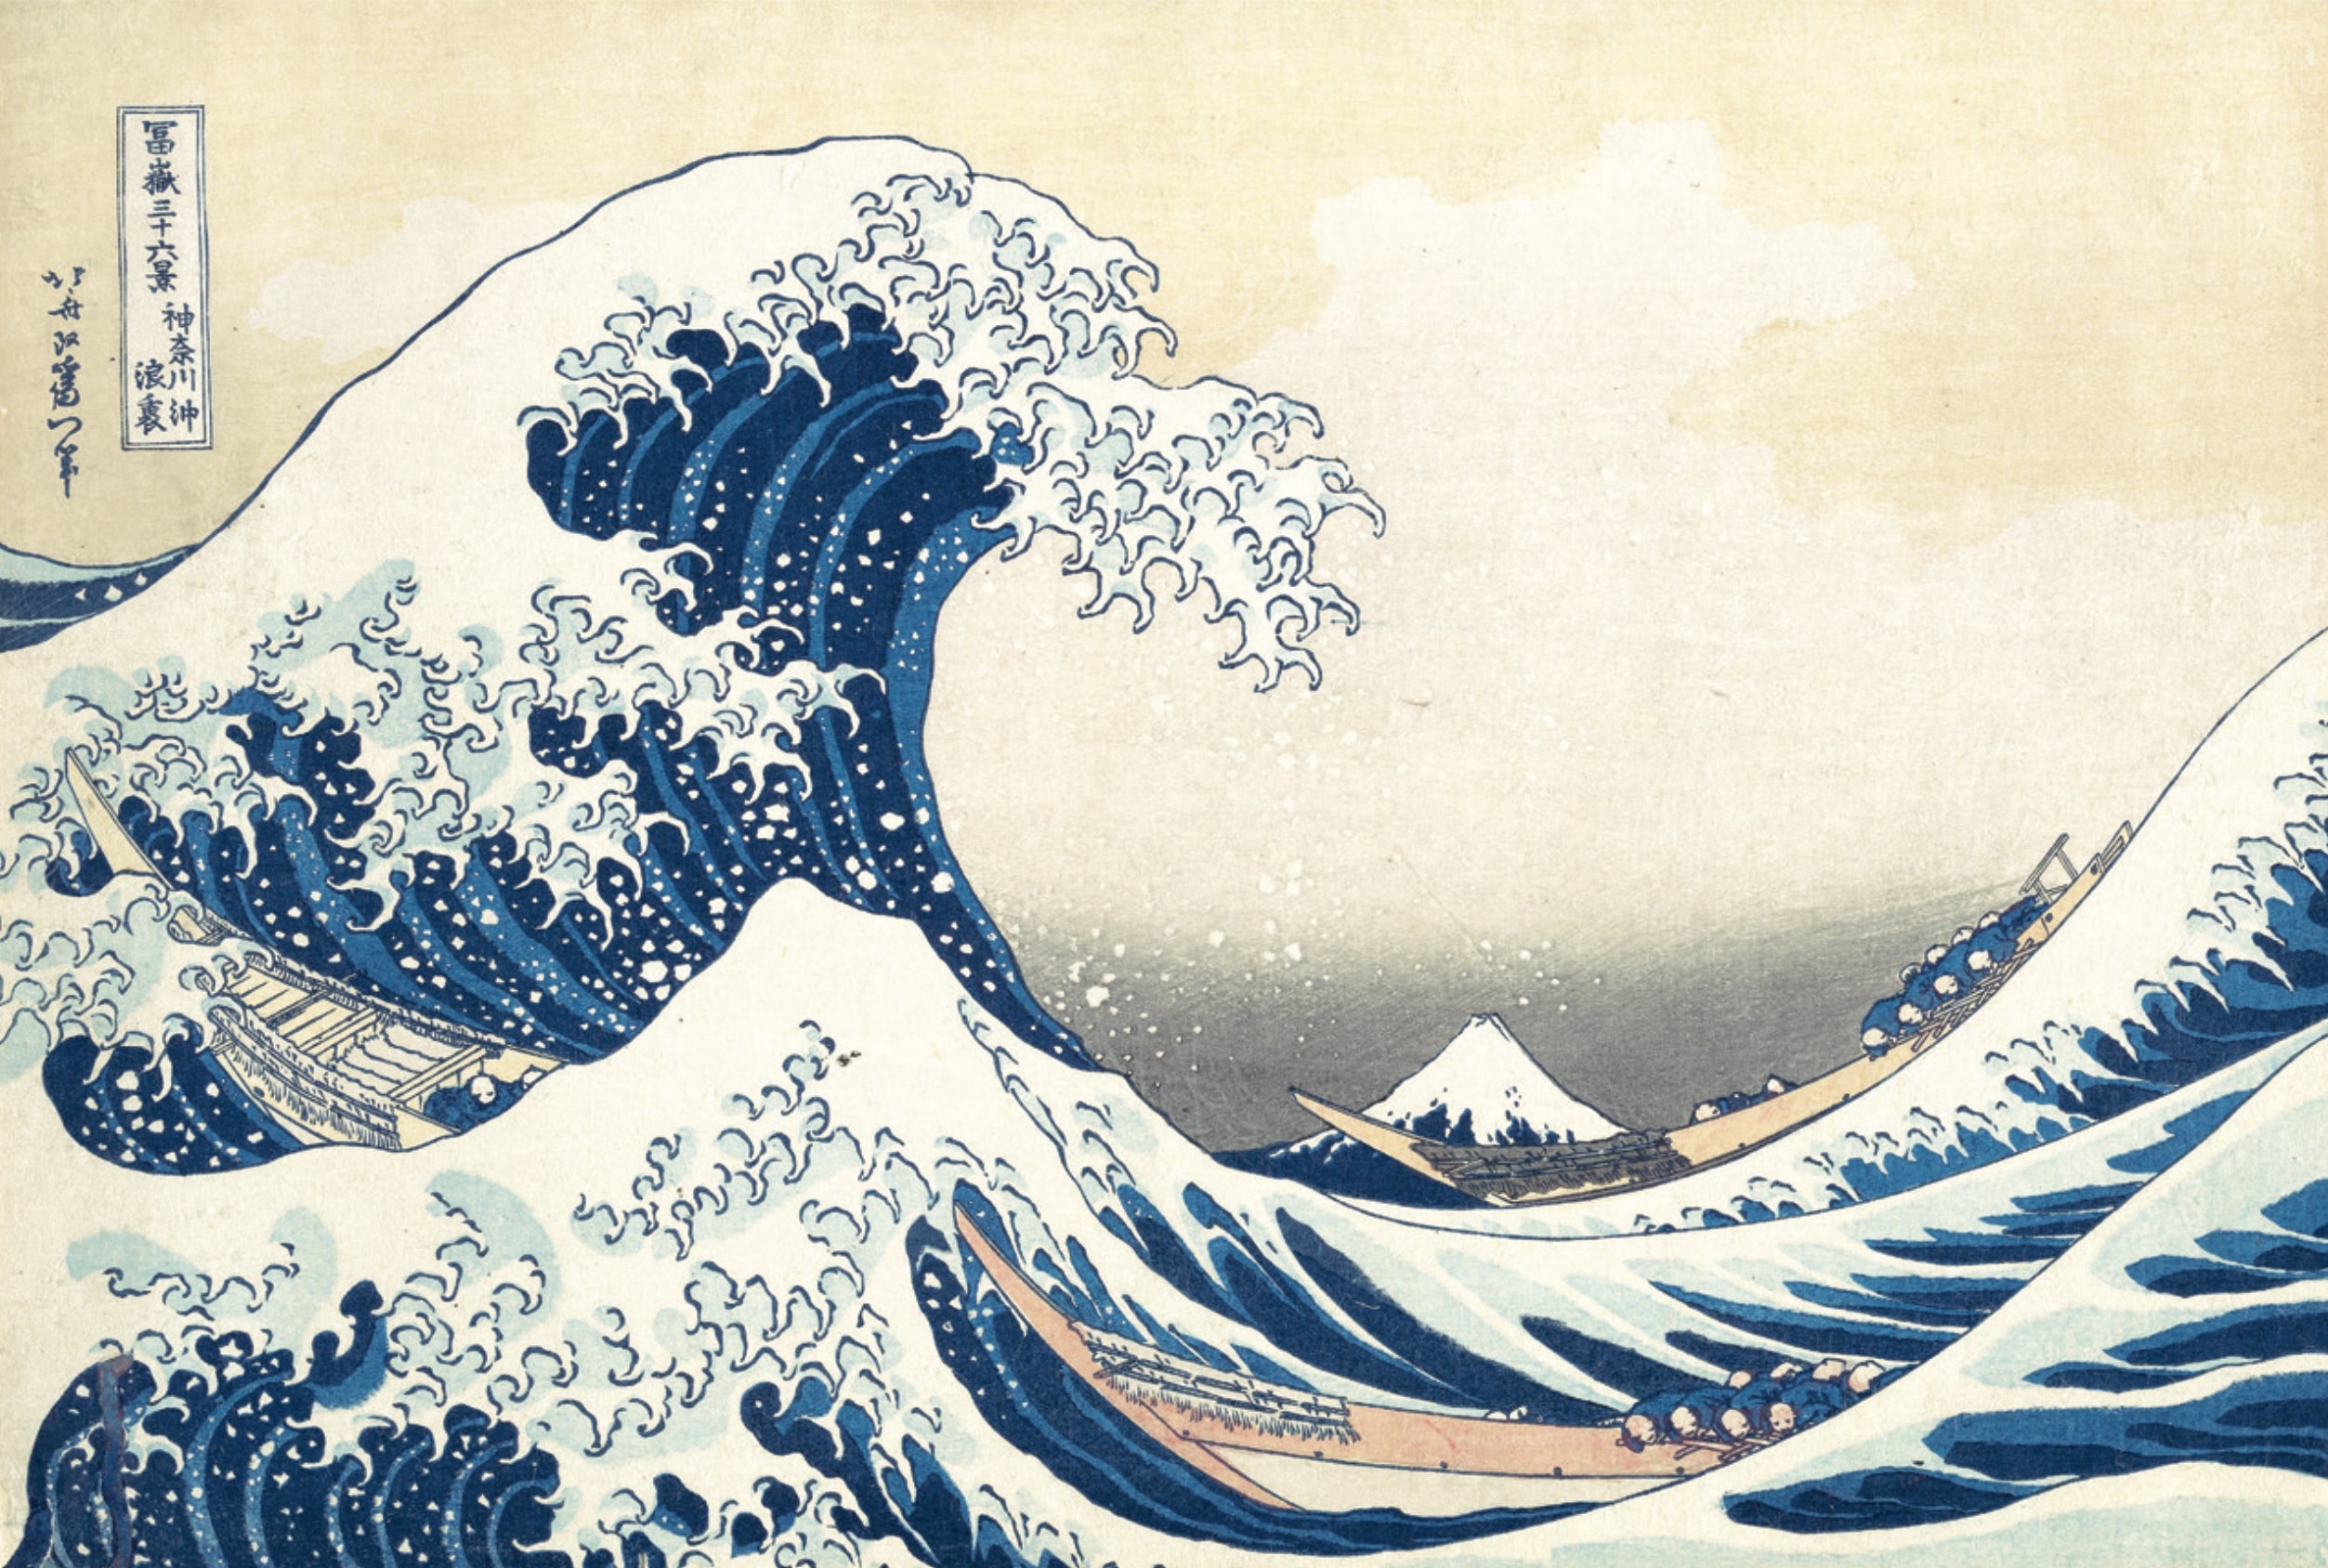 Hokusai Katsushiko: A kanagavai nagy hullám, 1831, fametszet, 25,7 cm × 37,8 cm, forrás: Wikimedia Commons